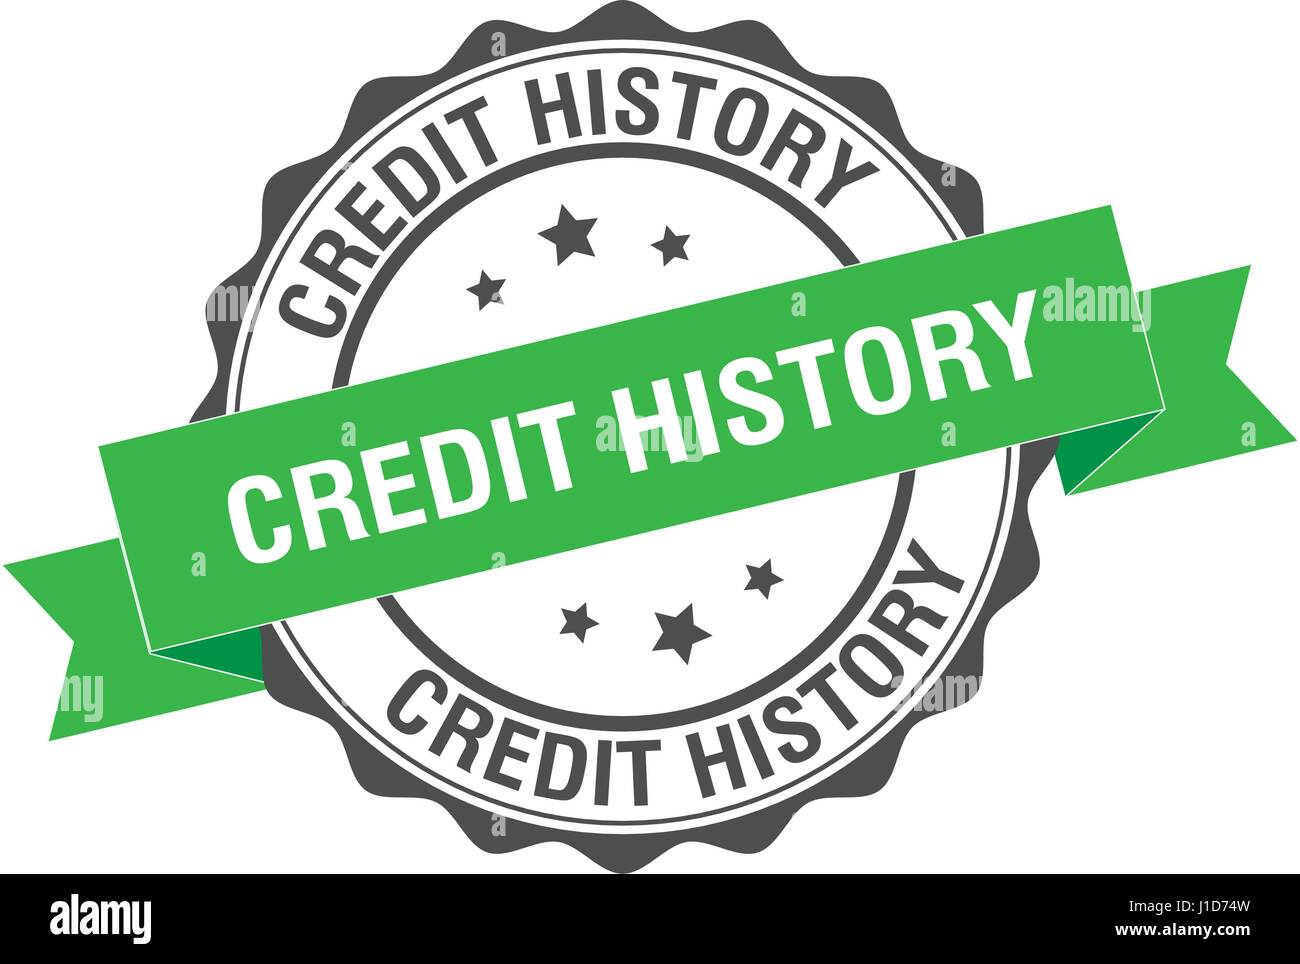 Credit history stamp illustration Stock Vector